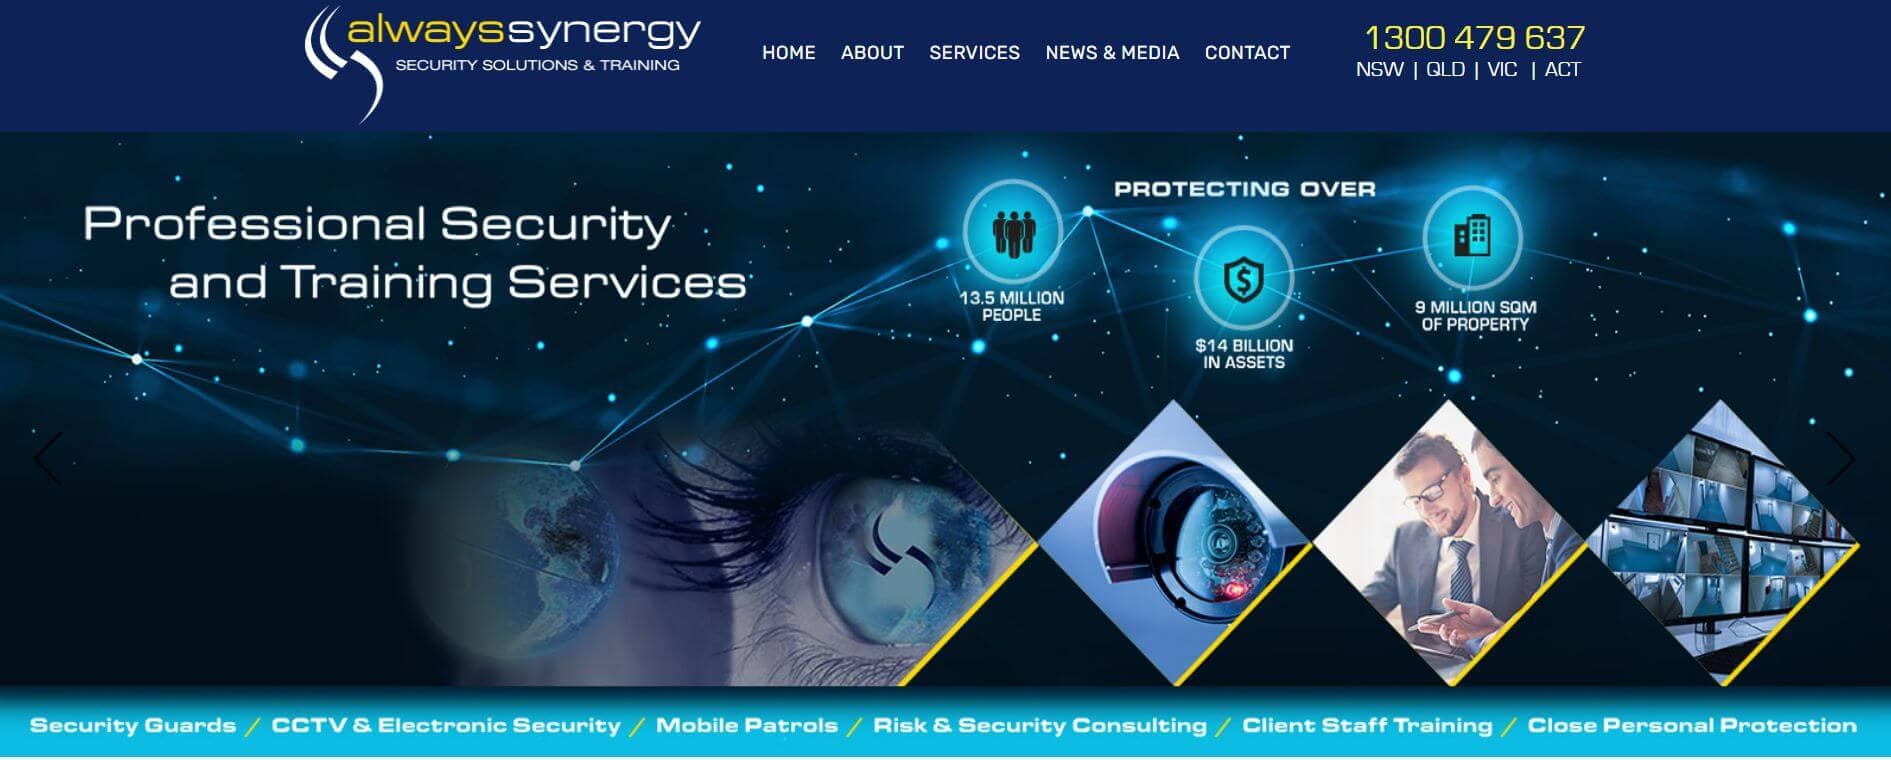 always synergy security guard company sydney